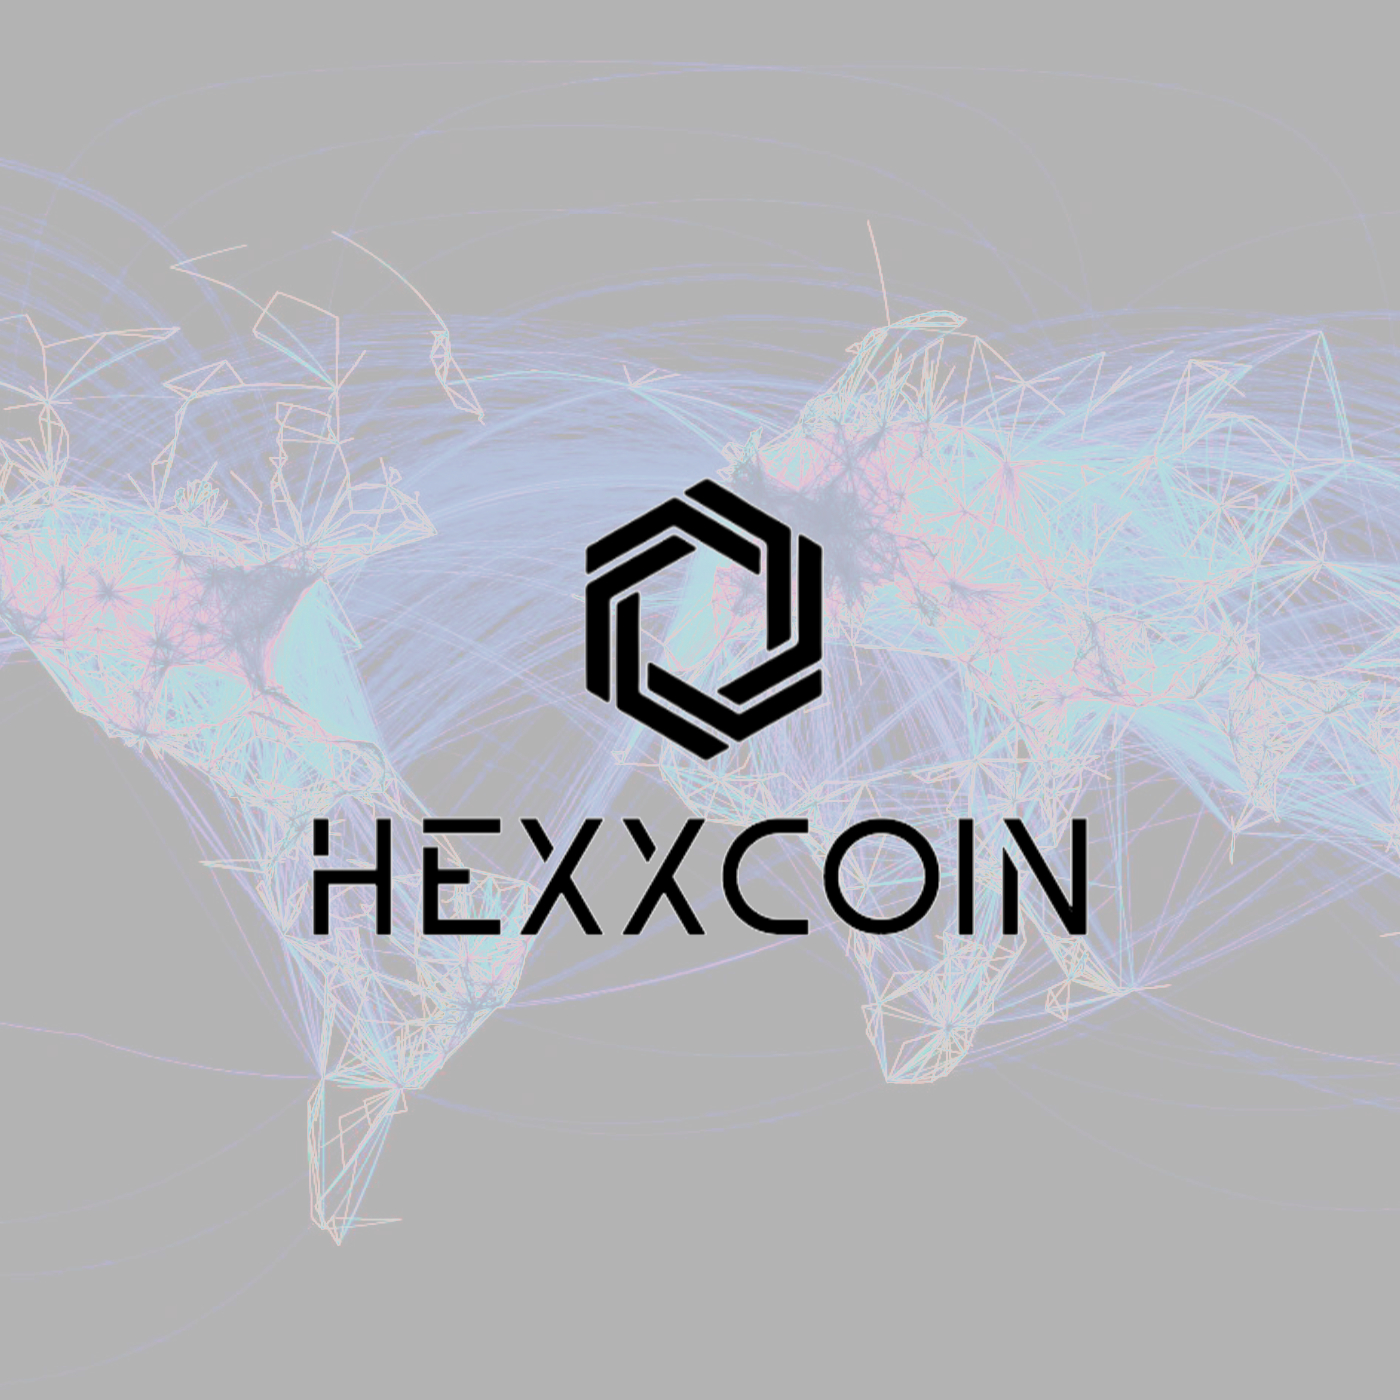 HexxCoin_logo.jpg